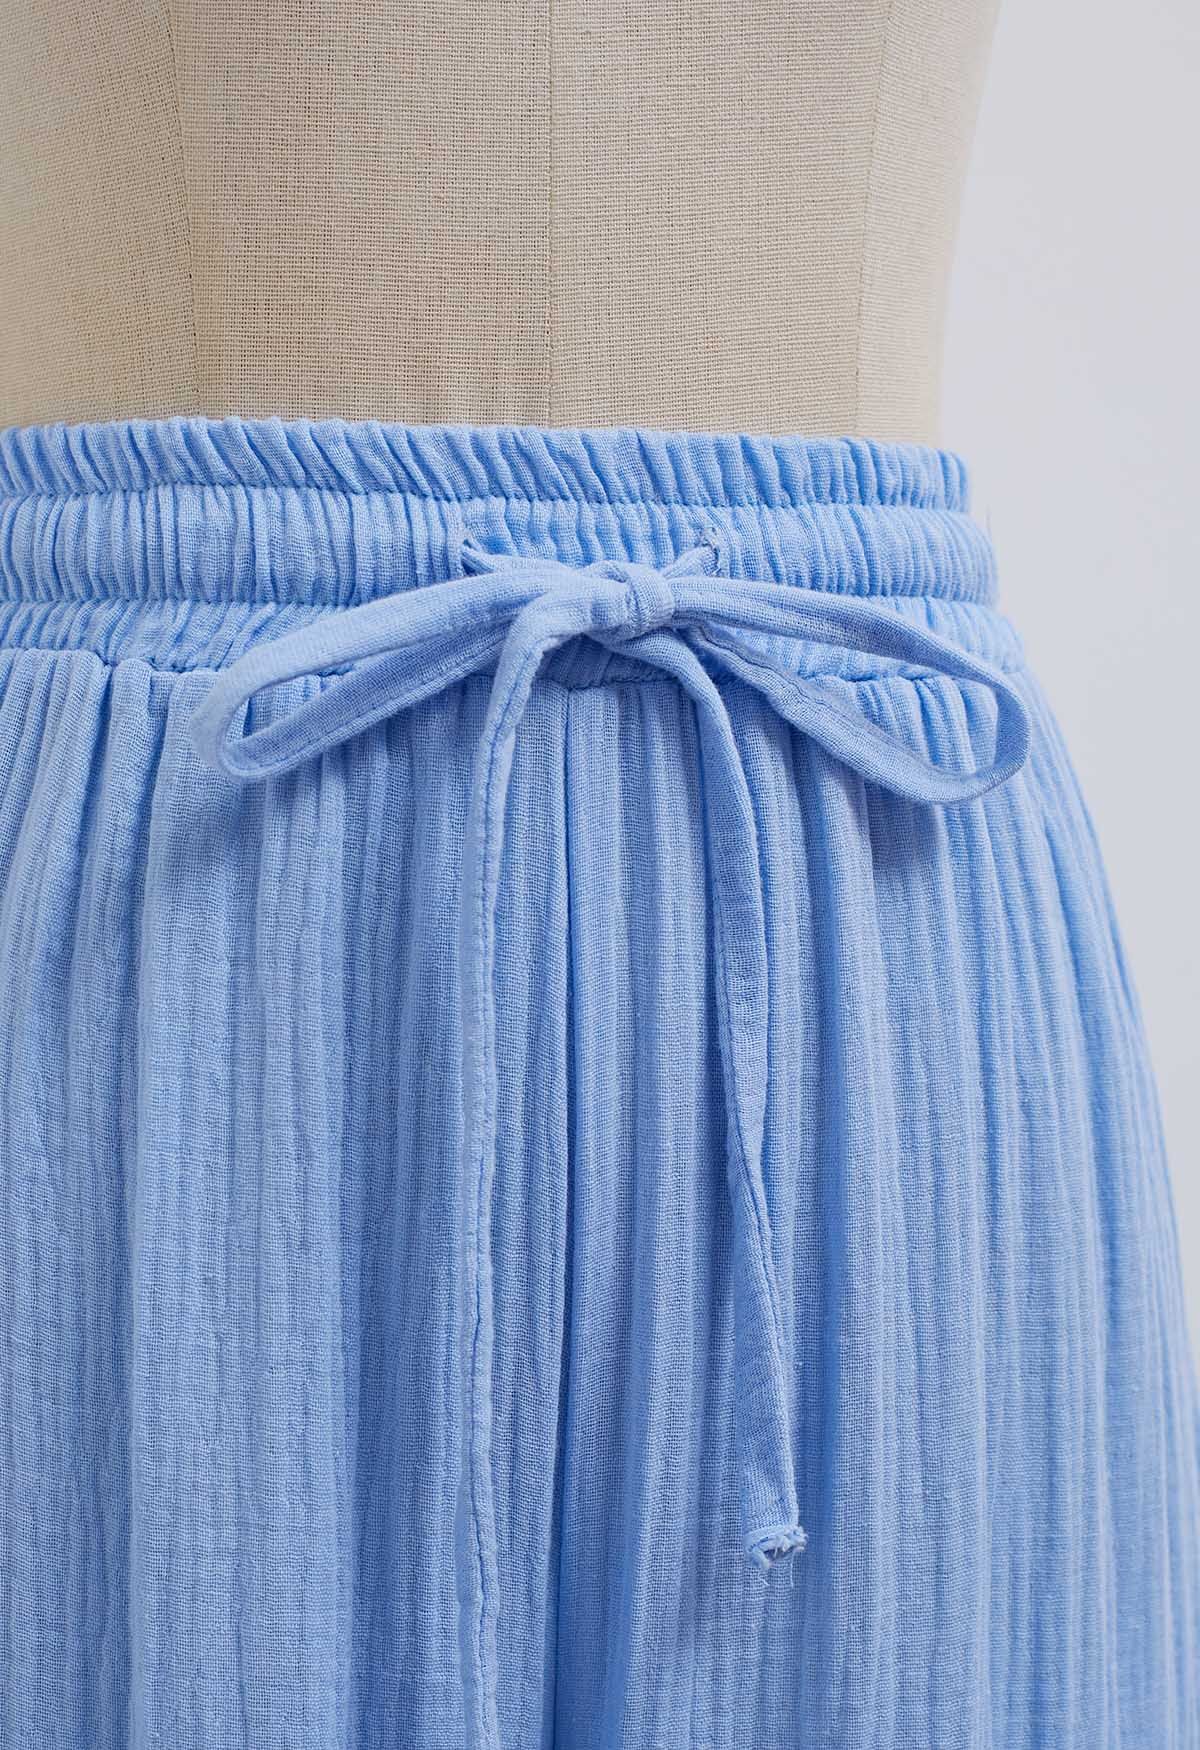 Lightweight Cotton Drawstring Pants in Blue